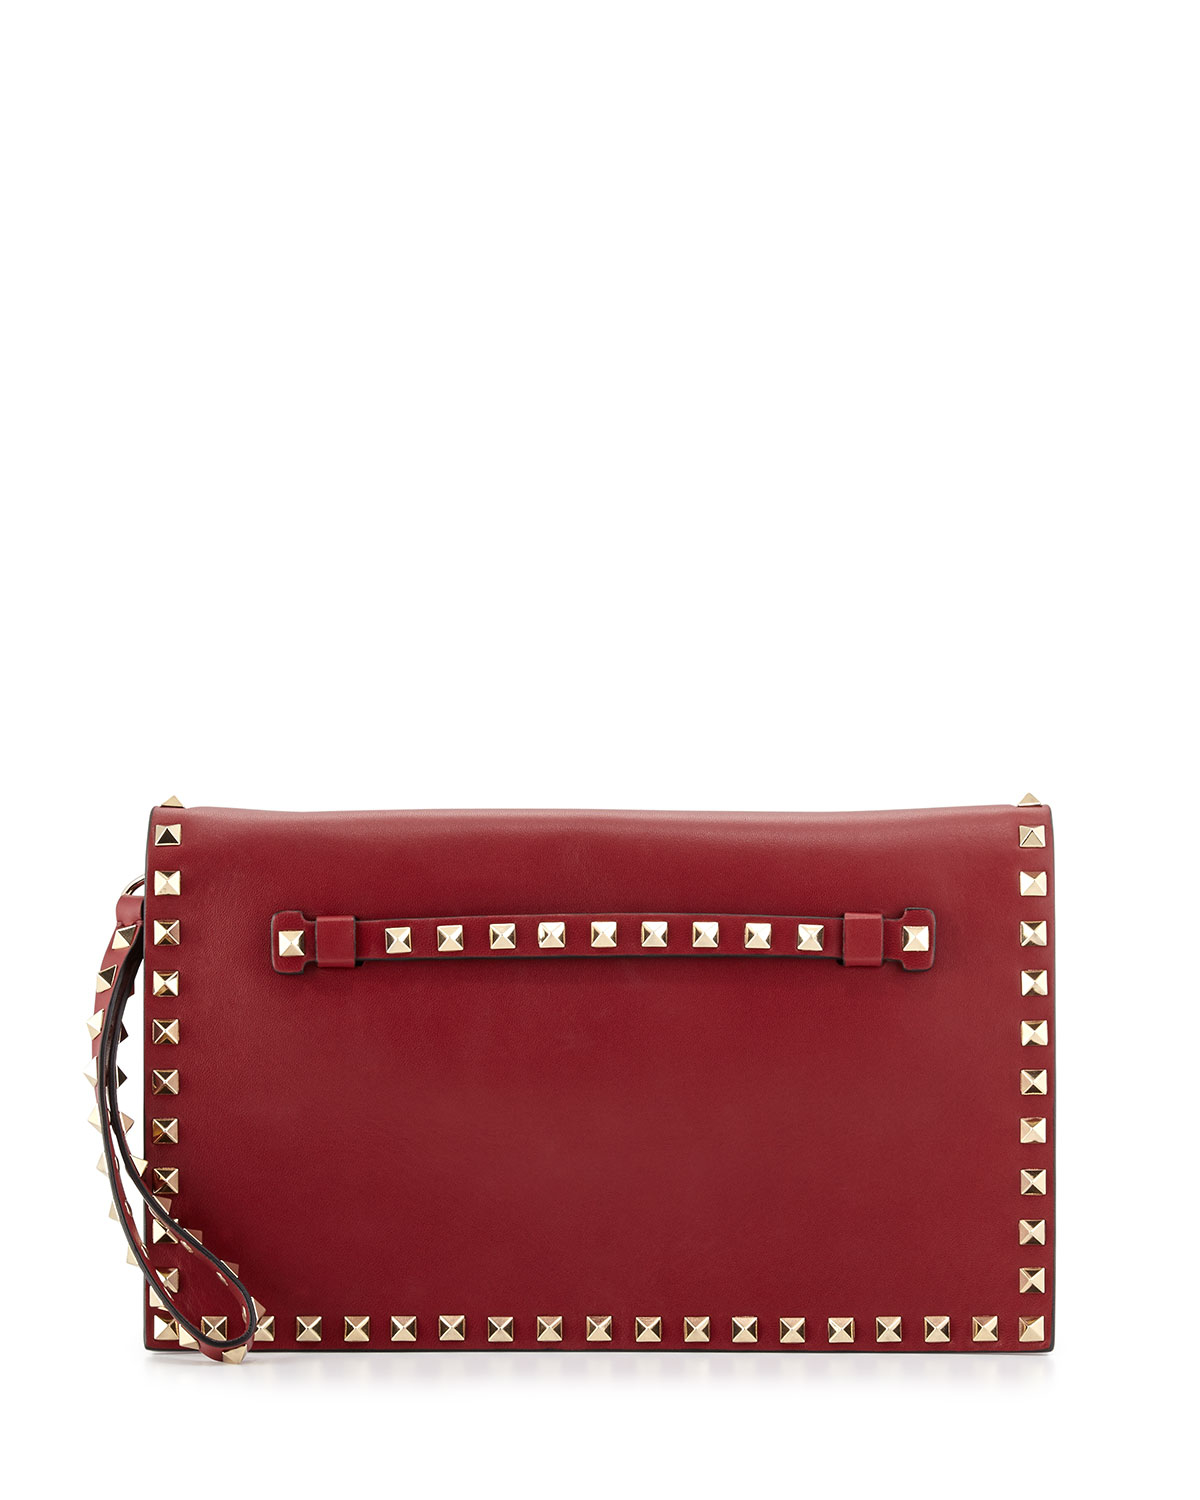 Valentino Leather Rockstud Flap Wristlet Clutch Bag in Scarlet (Red) - Lyst